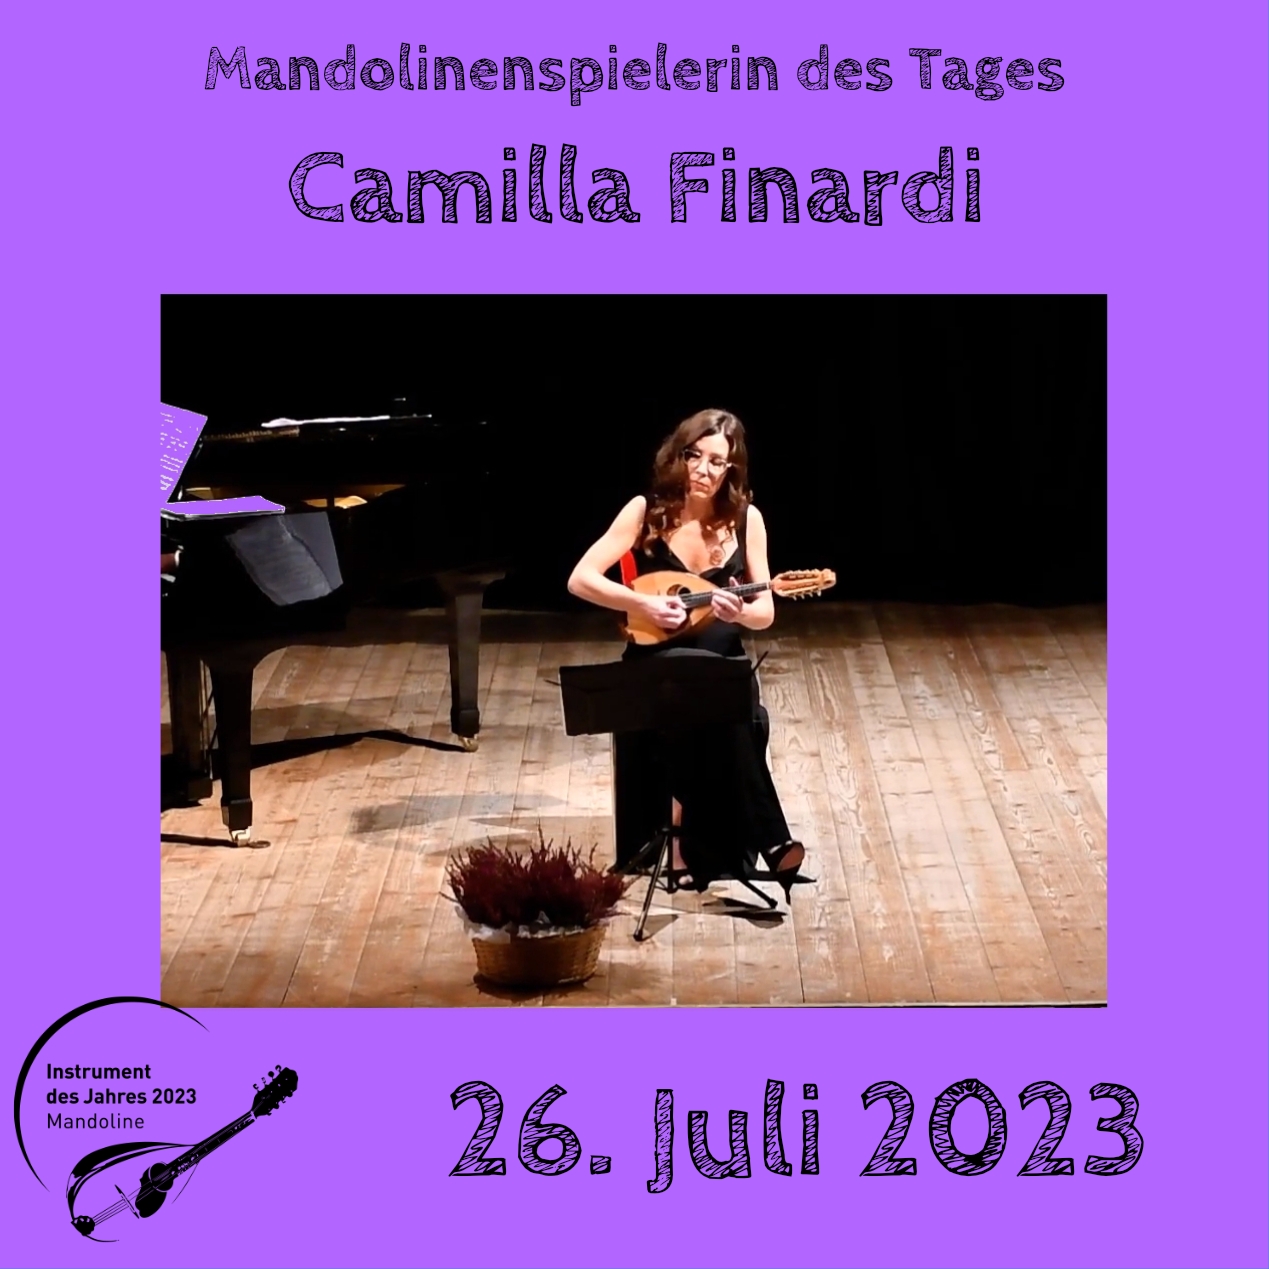 26. Juli - Camilla Finardi Mandoline Instrument des Jahres 2023 Mandolinenspieler Mandolinenspielerin des Tages